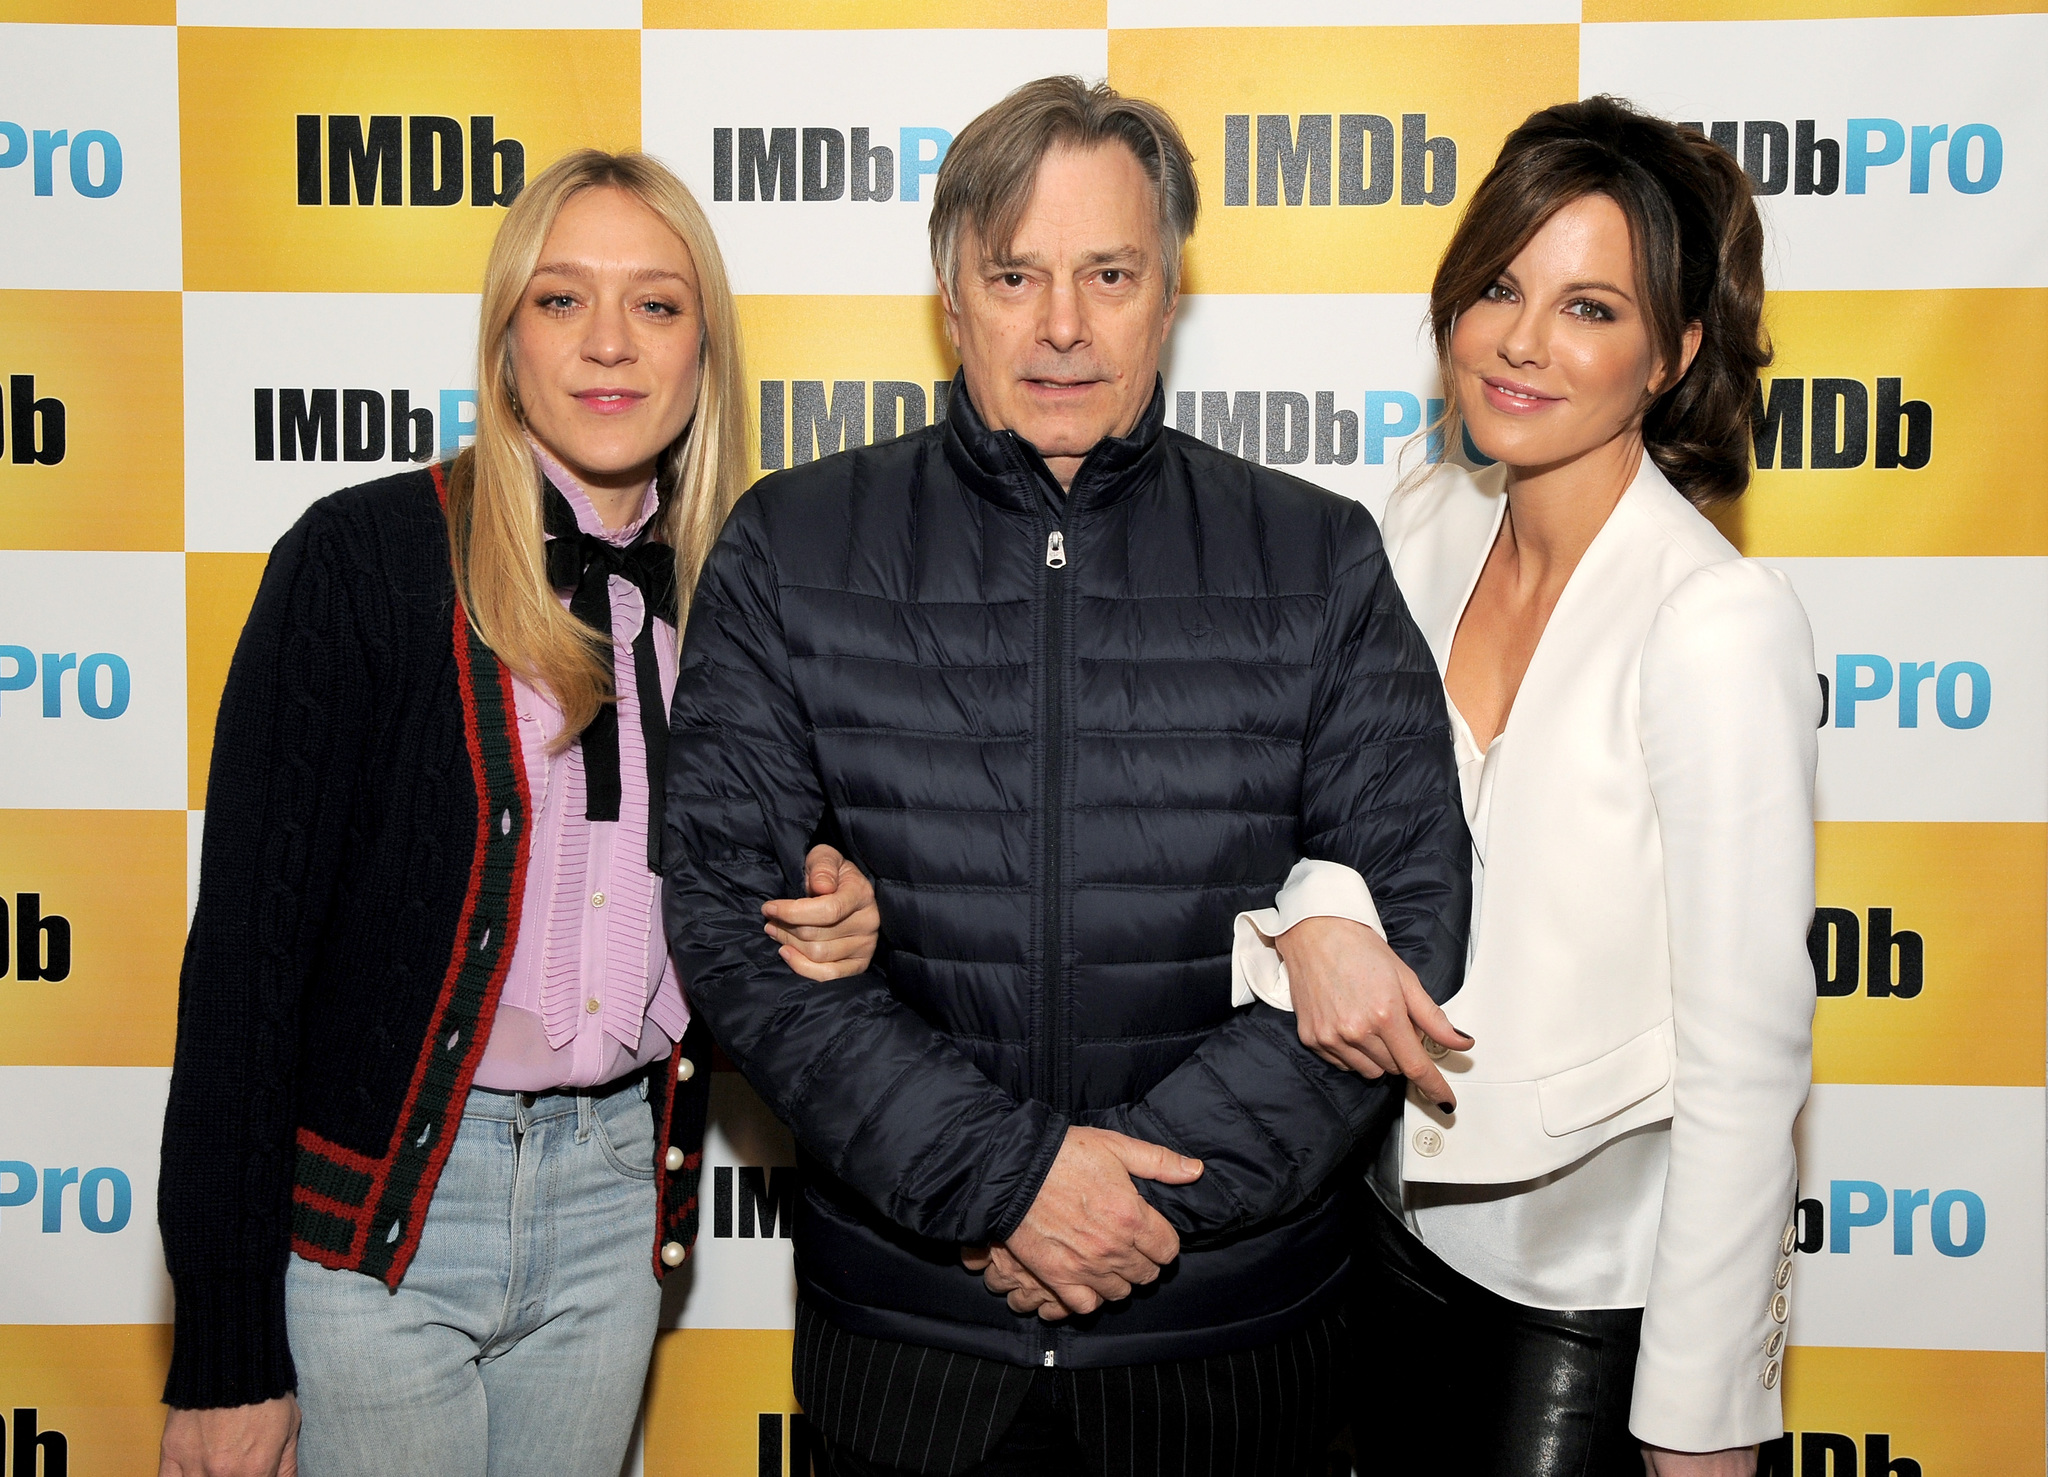 Kate Beckinsale, Chloë Sevigny and Whit Stillman at event of The IMDb Studio (2015)